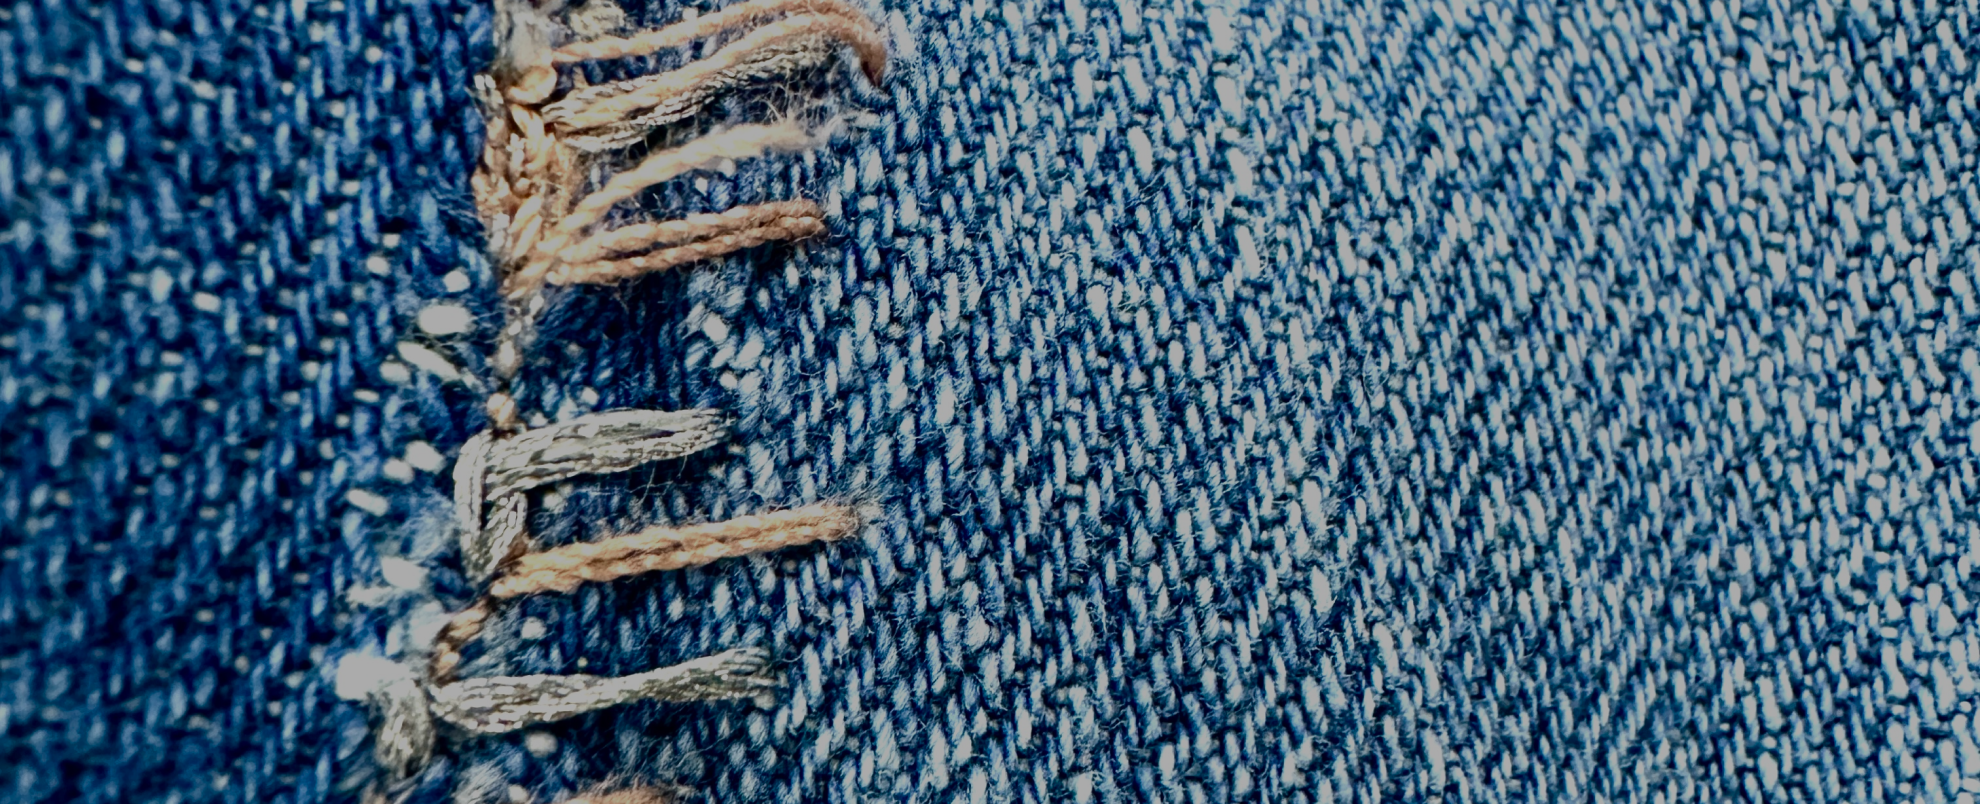 Jean stitching